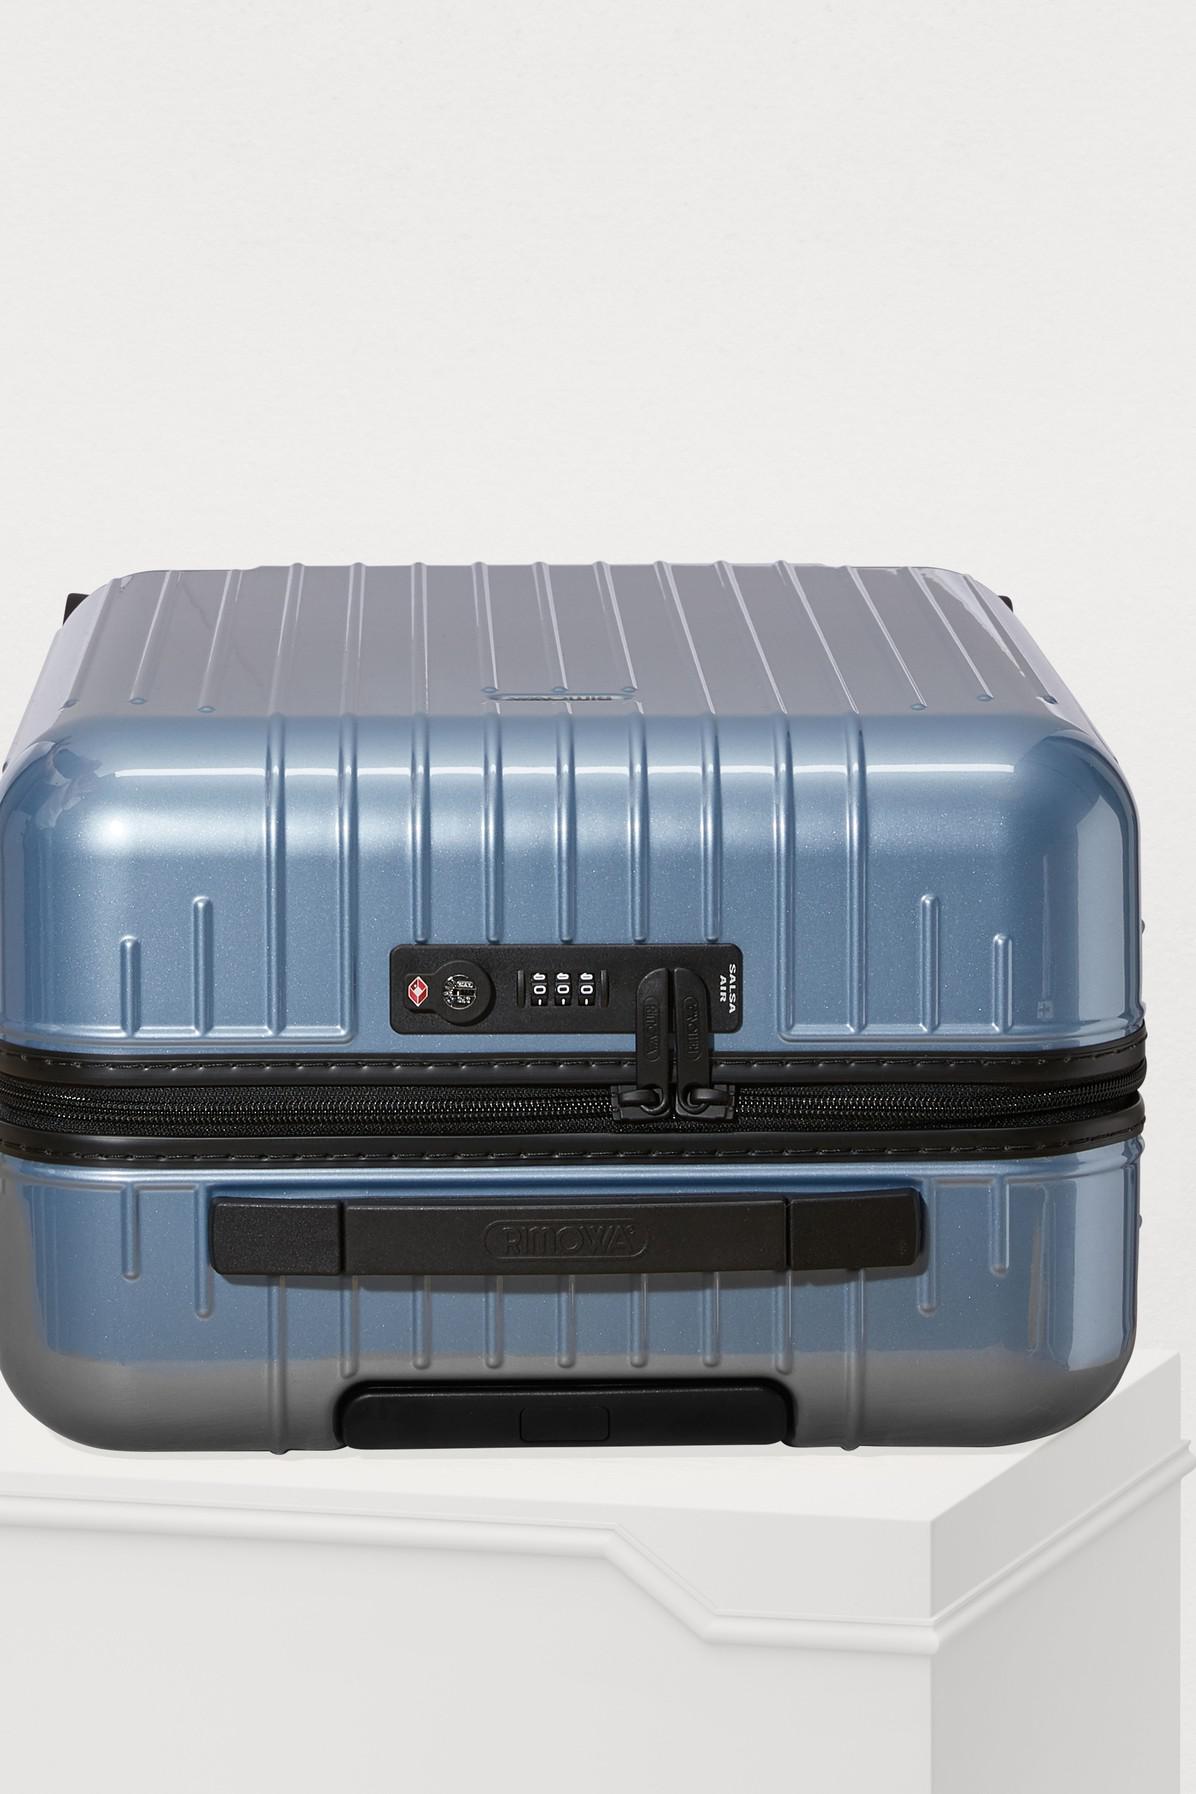 Rimowa Salsa Air Ultralight Cabin Multiwheel – Luggage Online